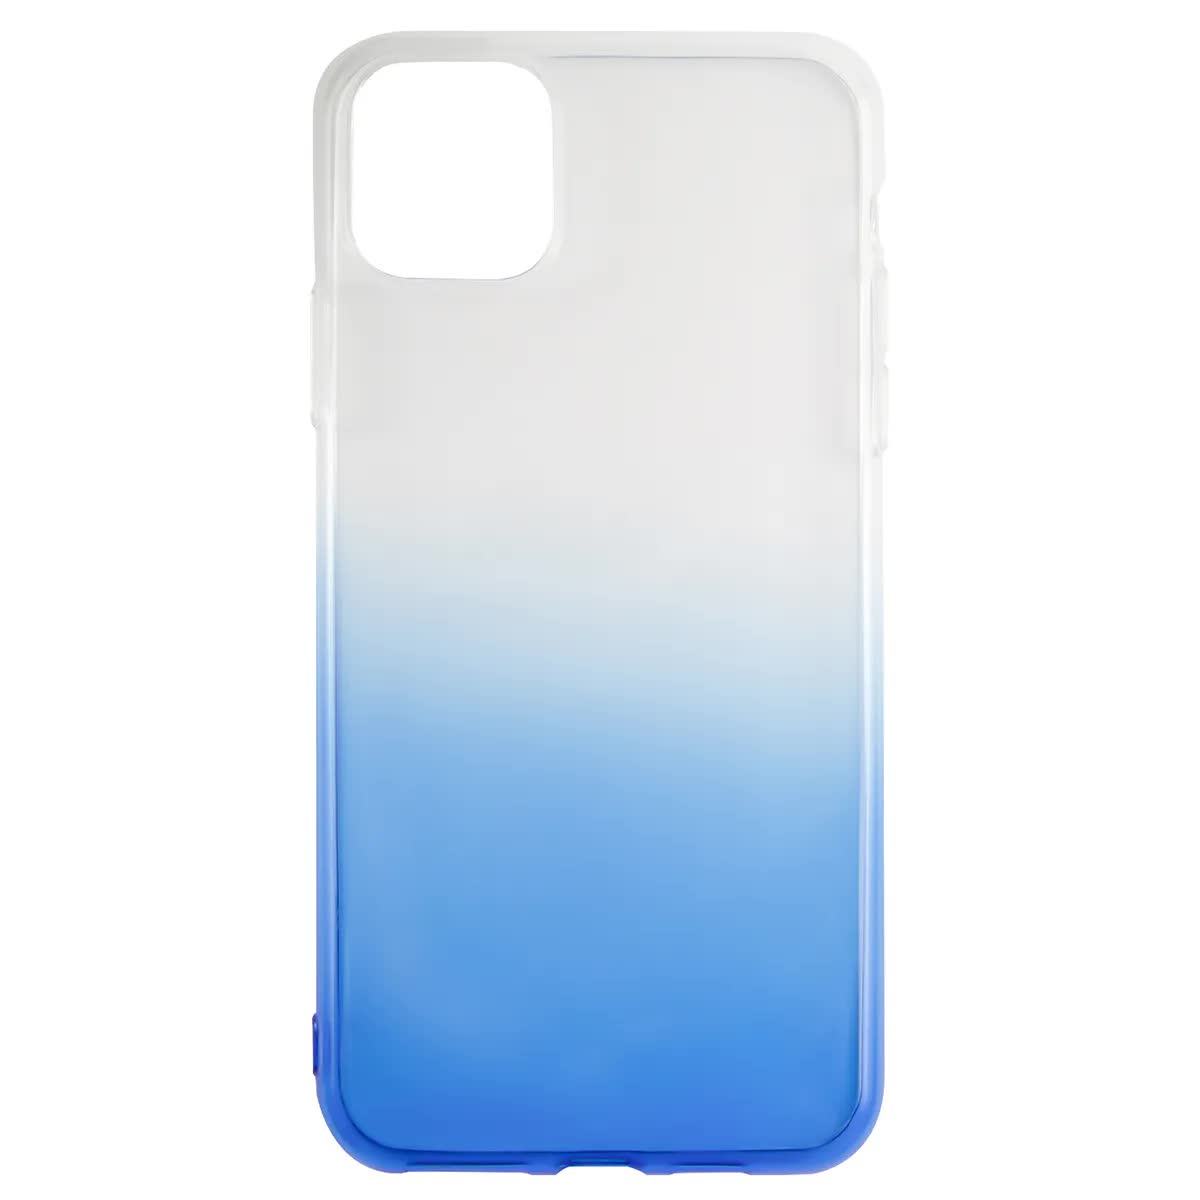 Чехол накладка силикон iBox Crystal для iPhone 11 Pro (градиент синий) чехол силикон ibox crystal для sony xperia m5 синий